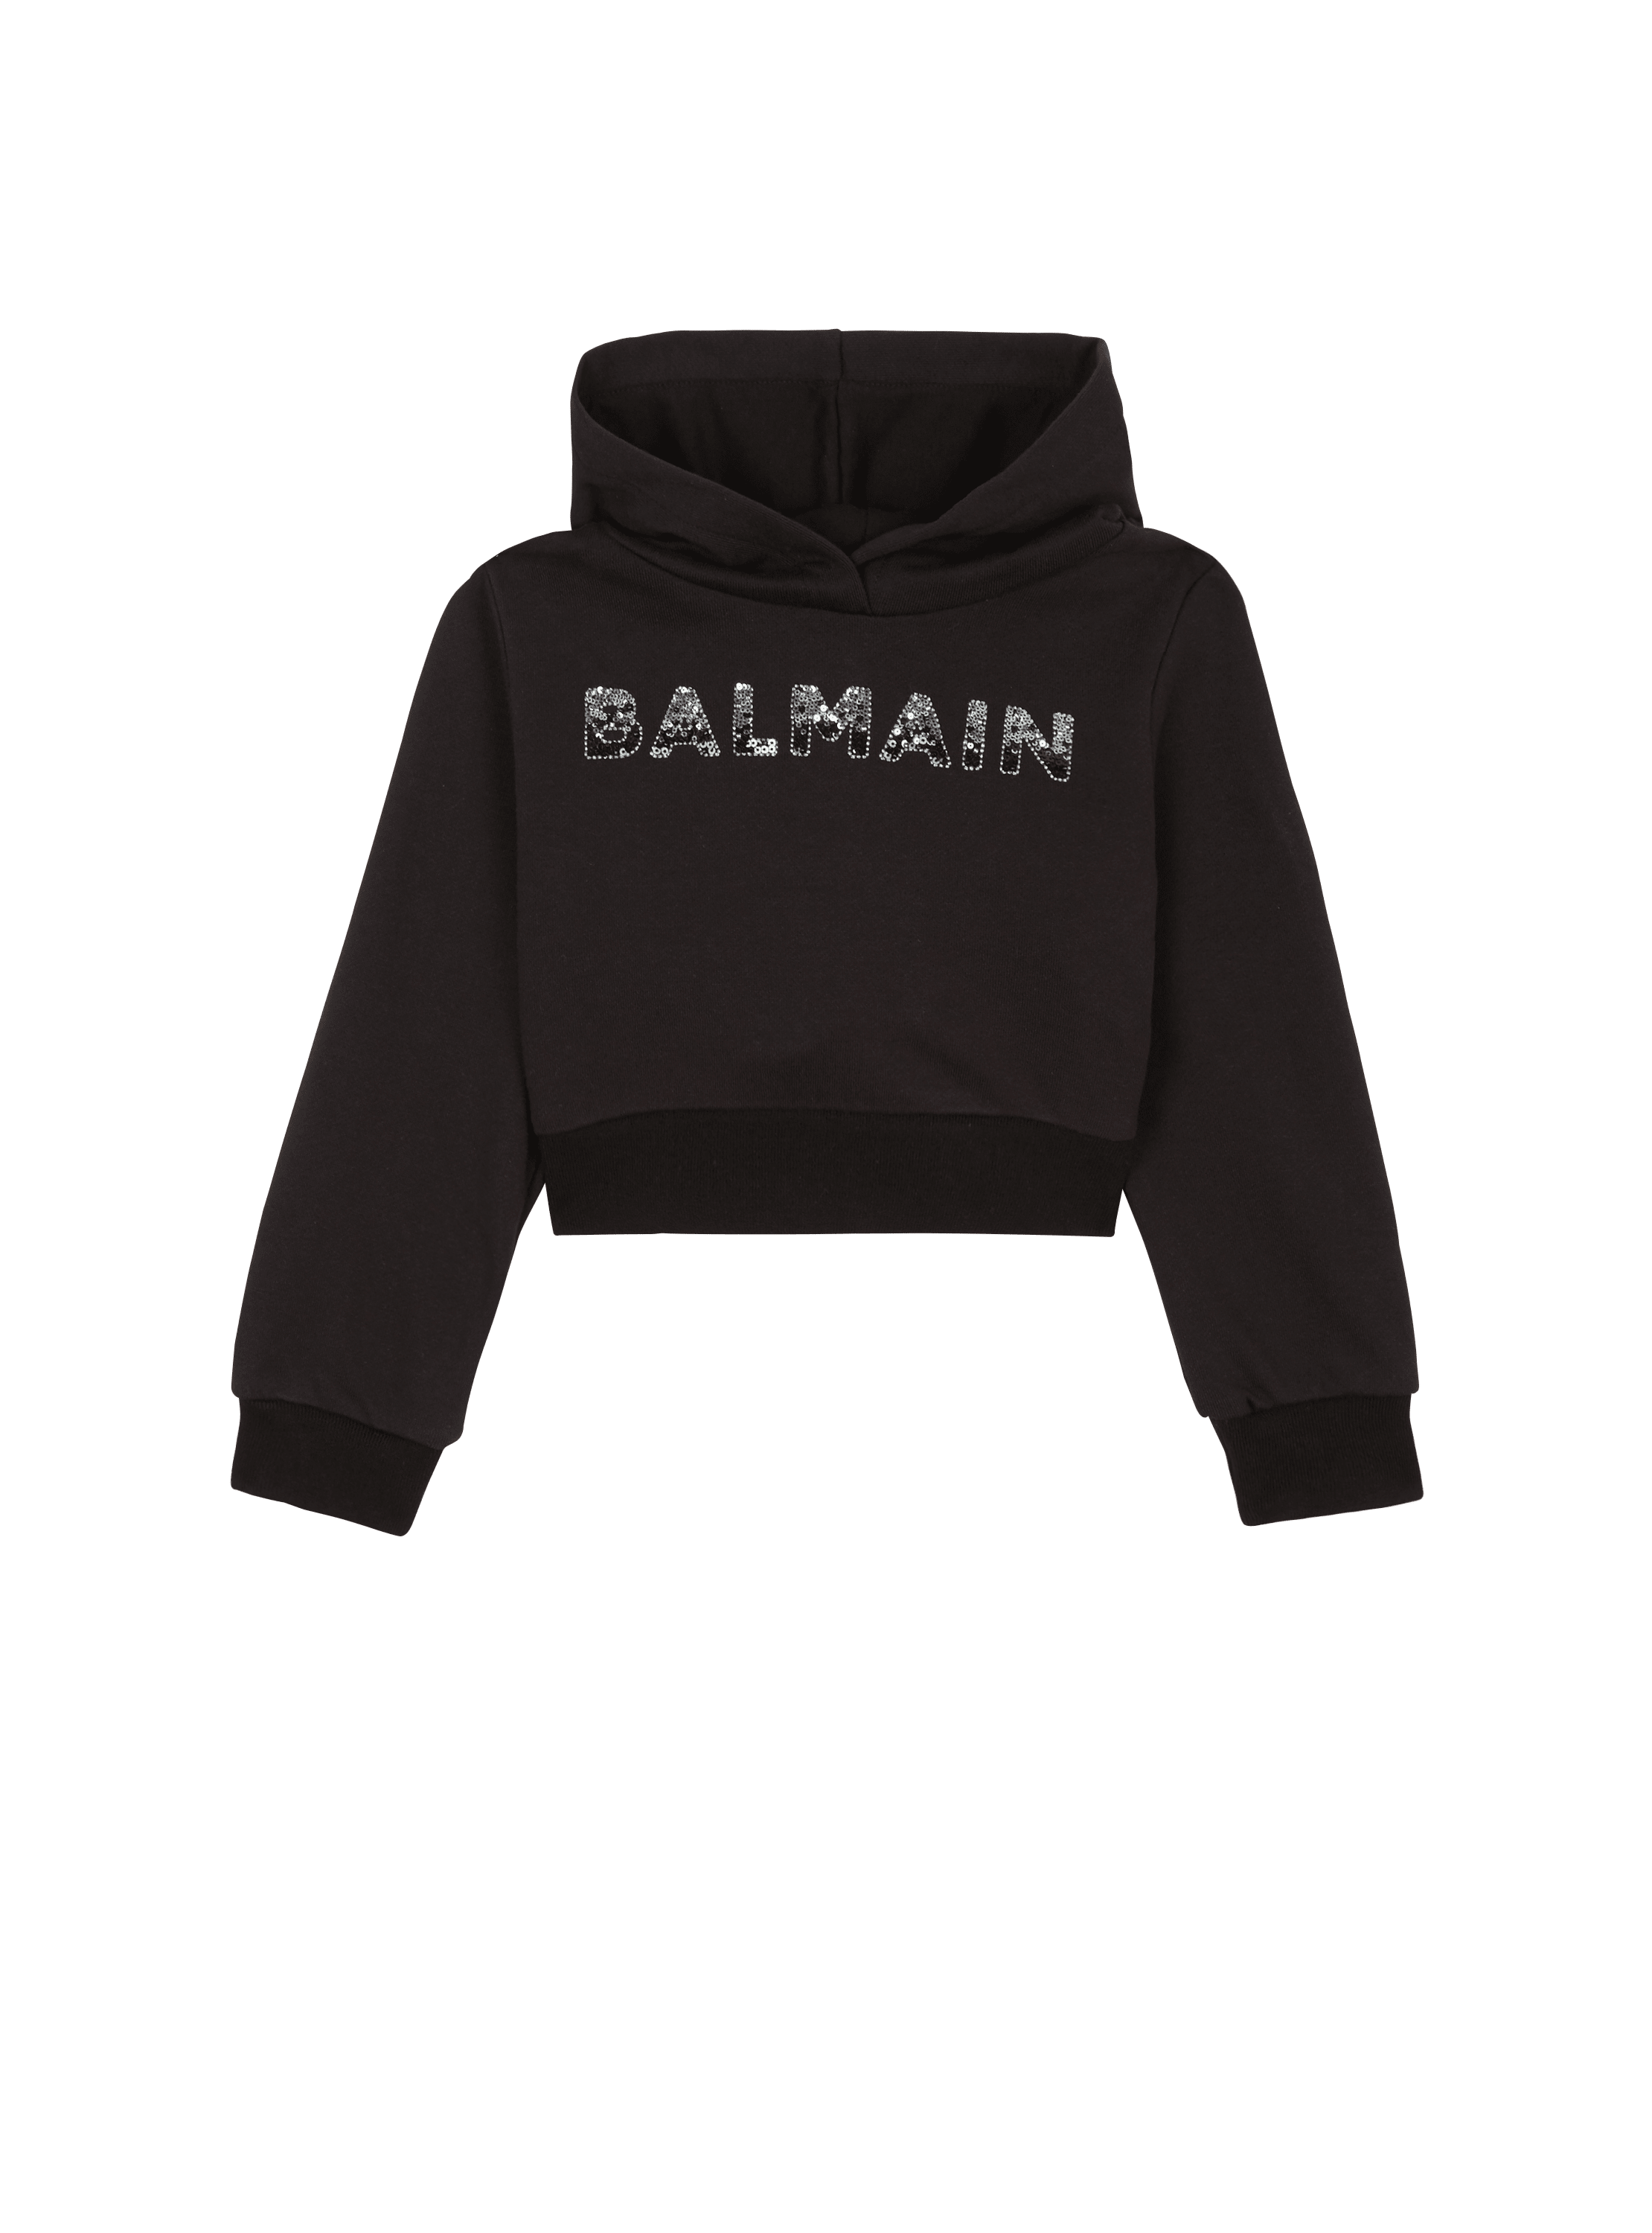 Balmain hoodie